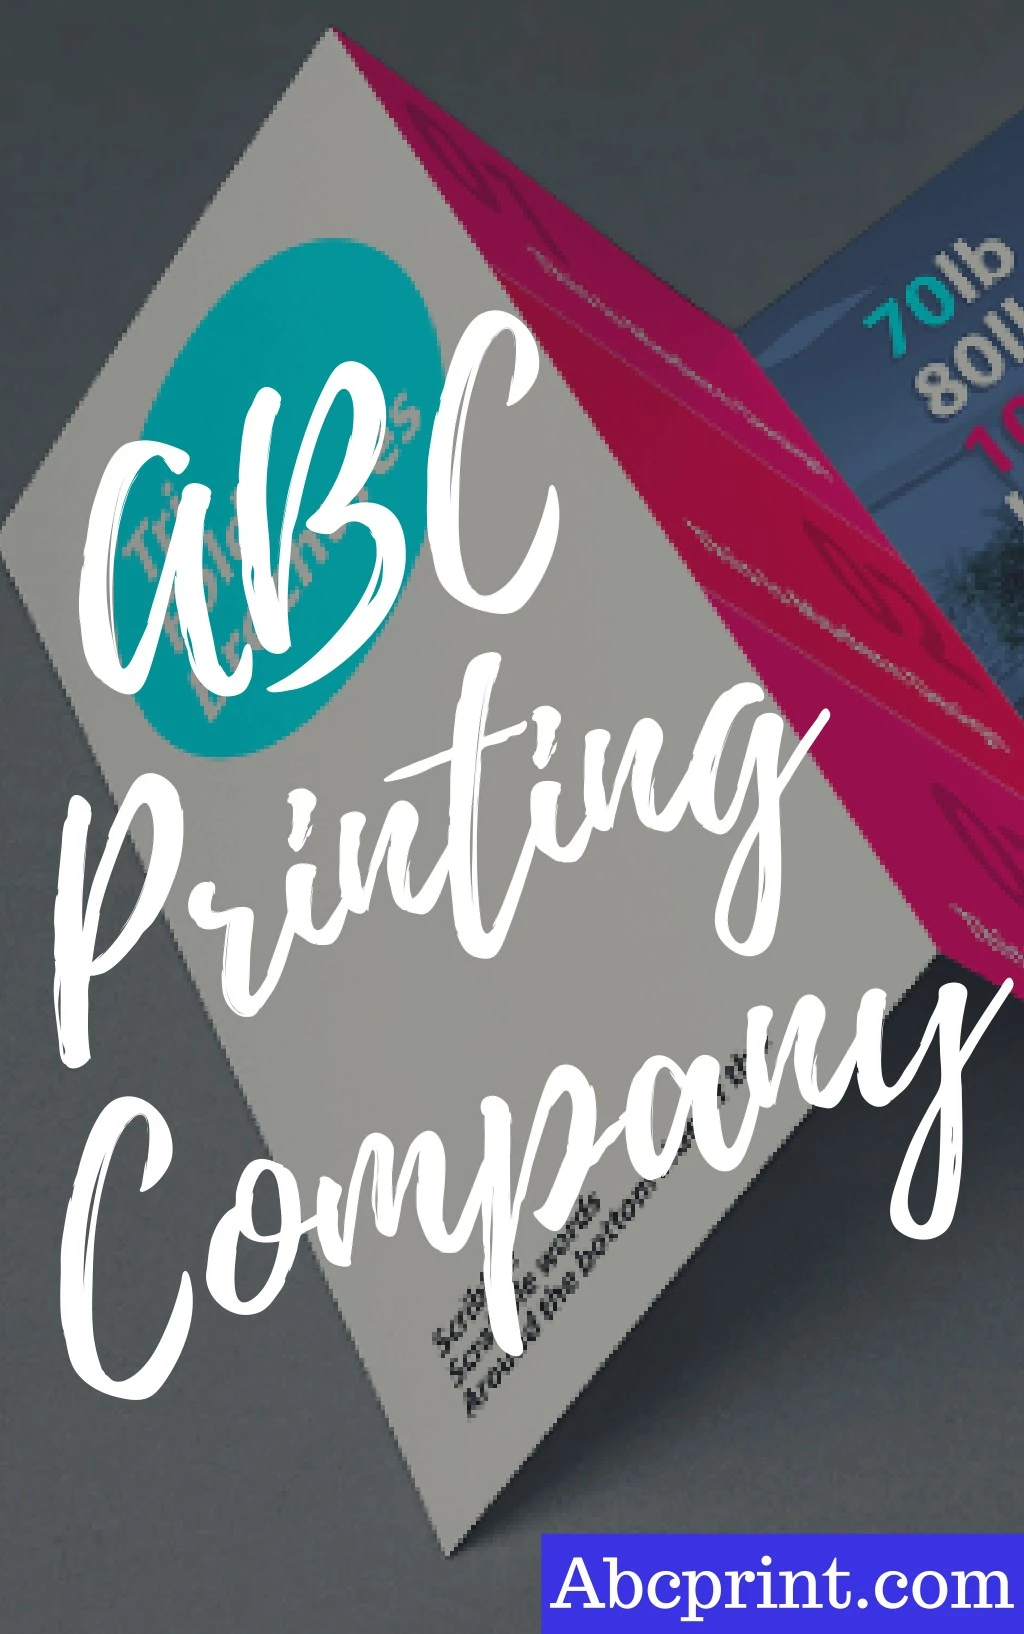 abc printing company